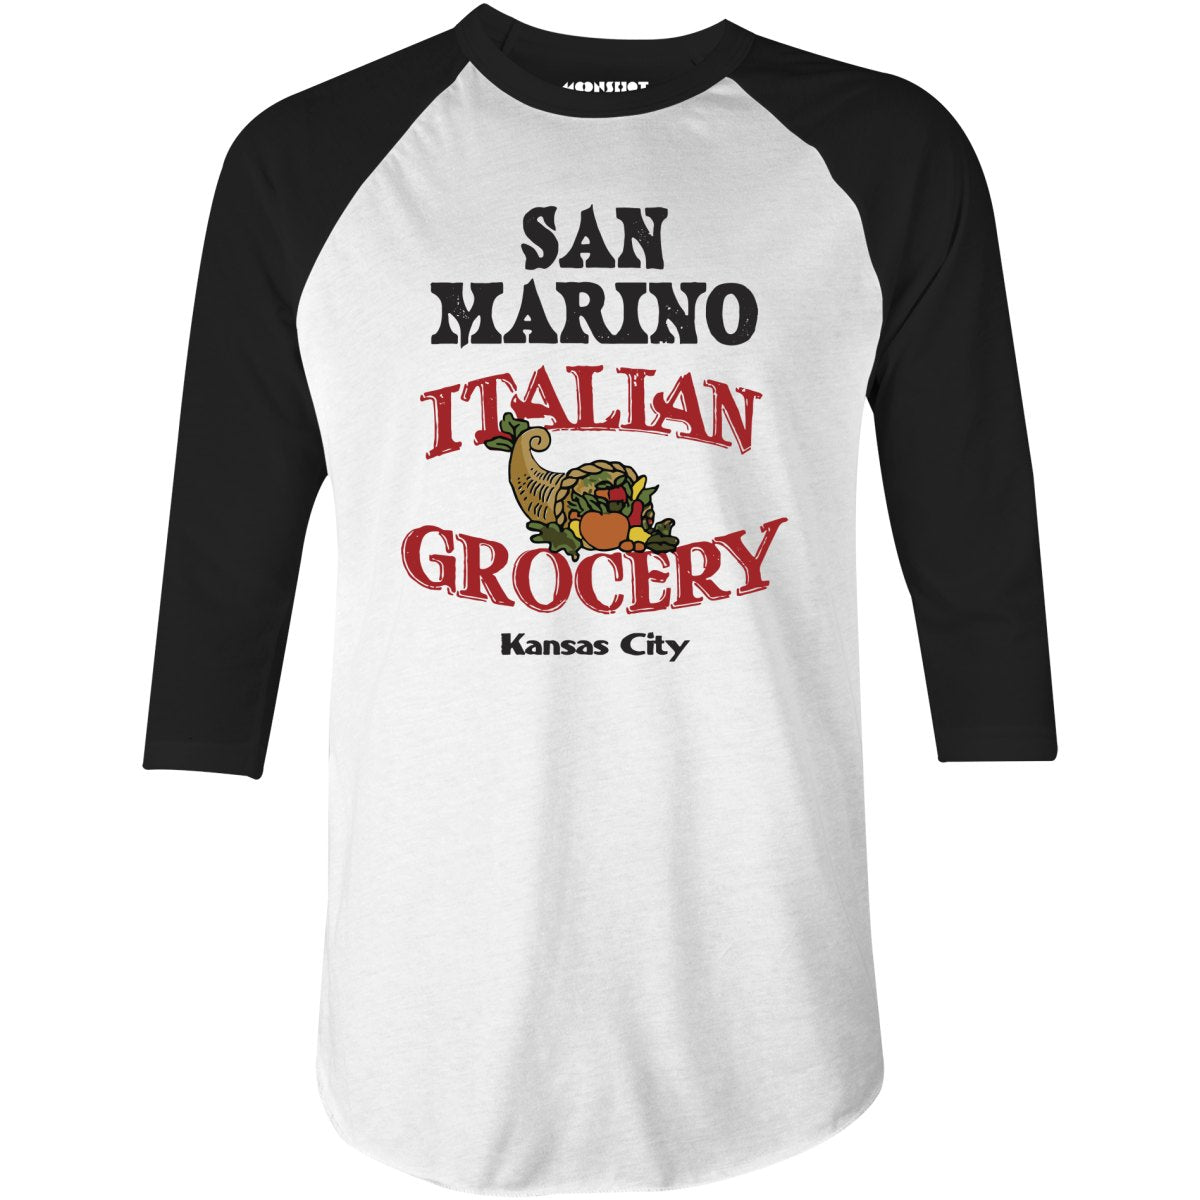 Casino - San Marino Italian Grocery - 3/4 Sleeve Raglan T-Shirt